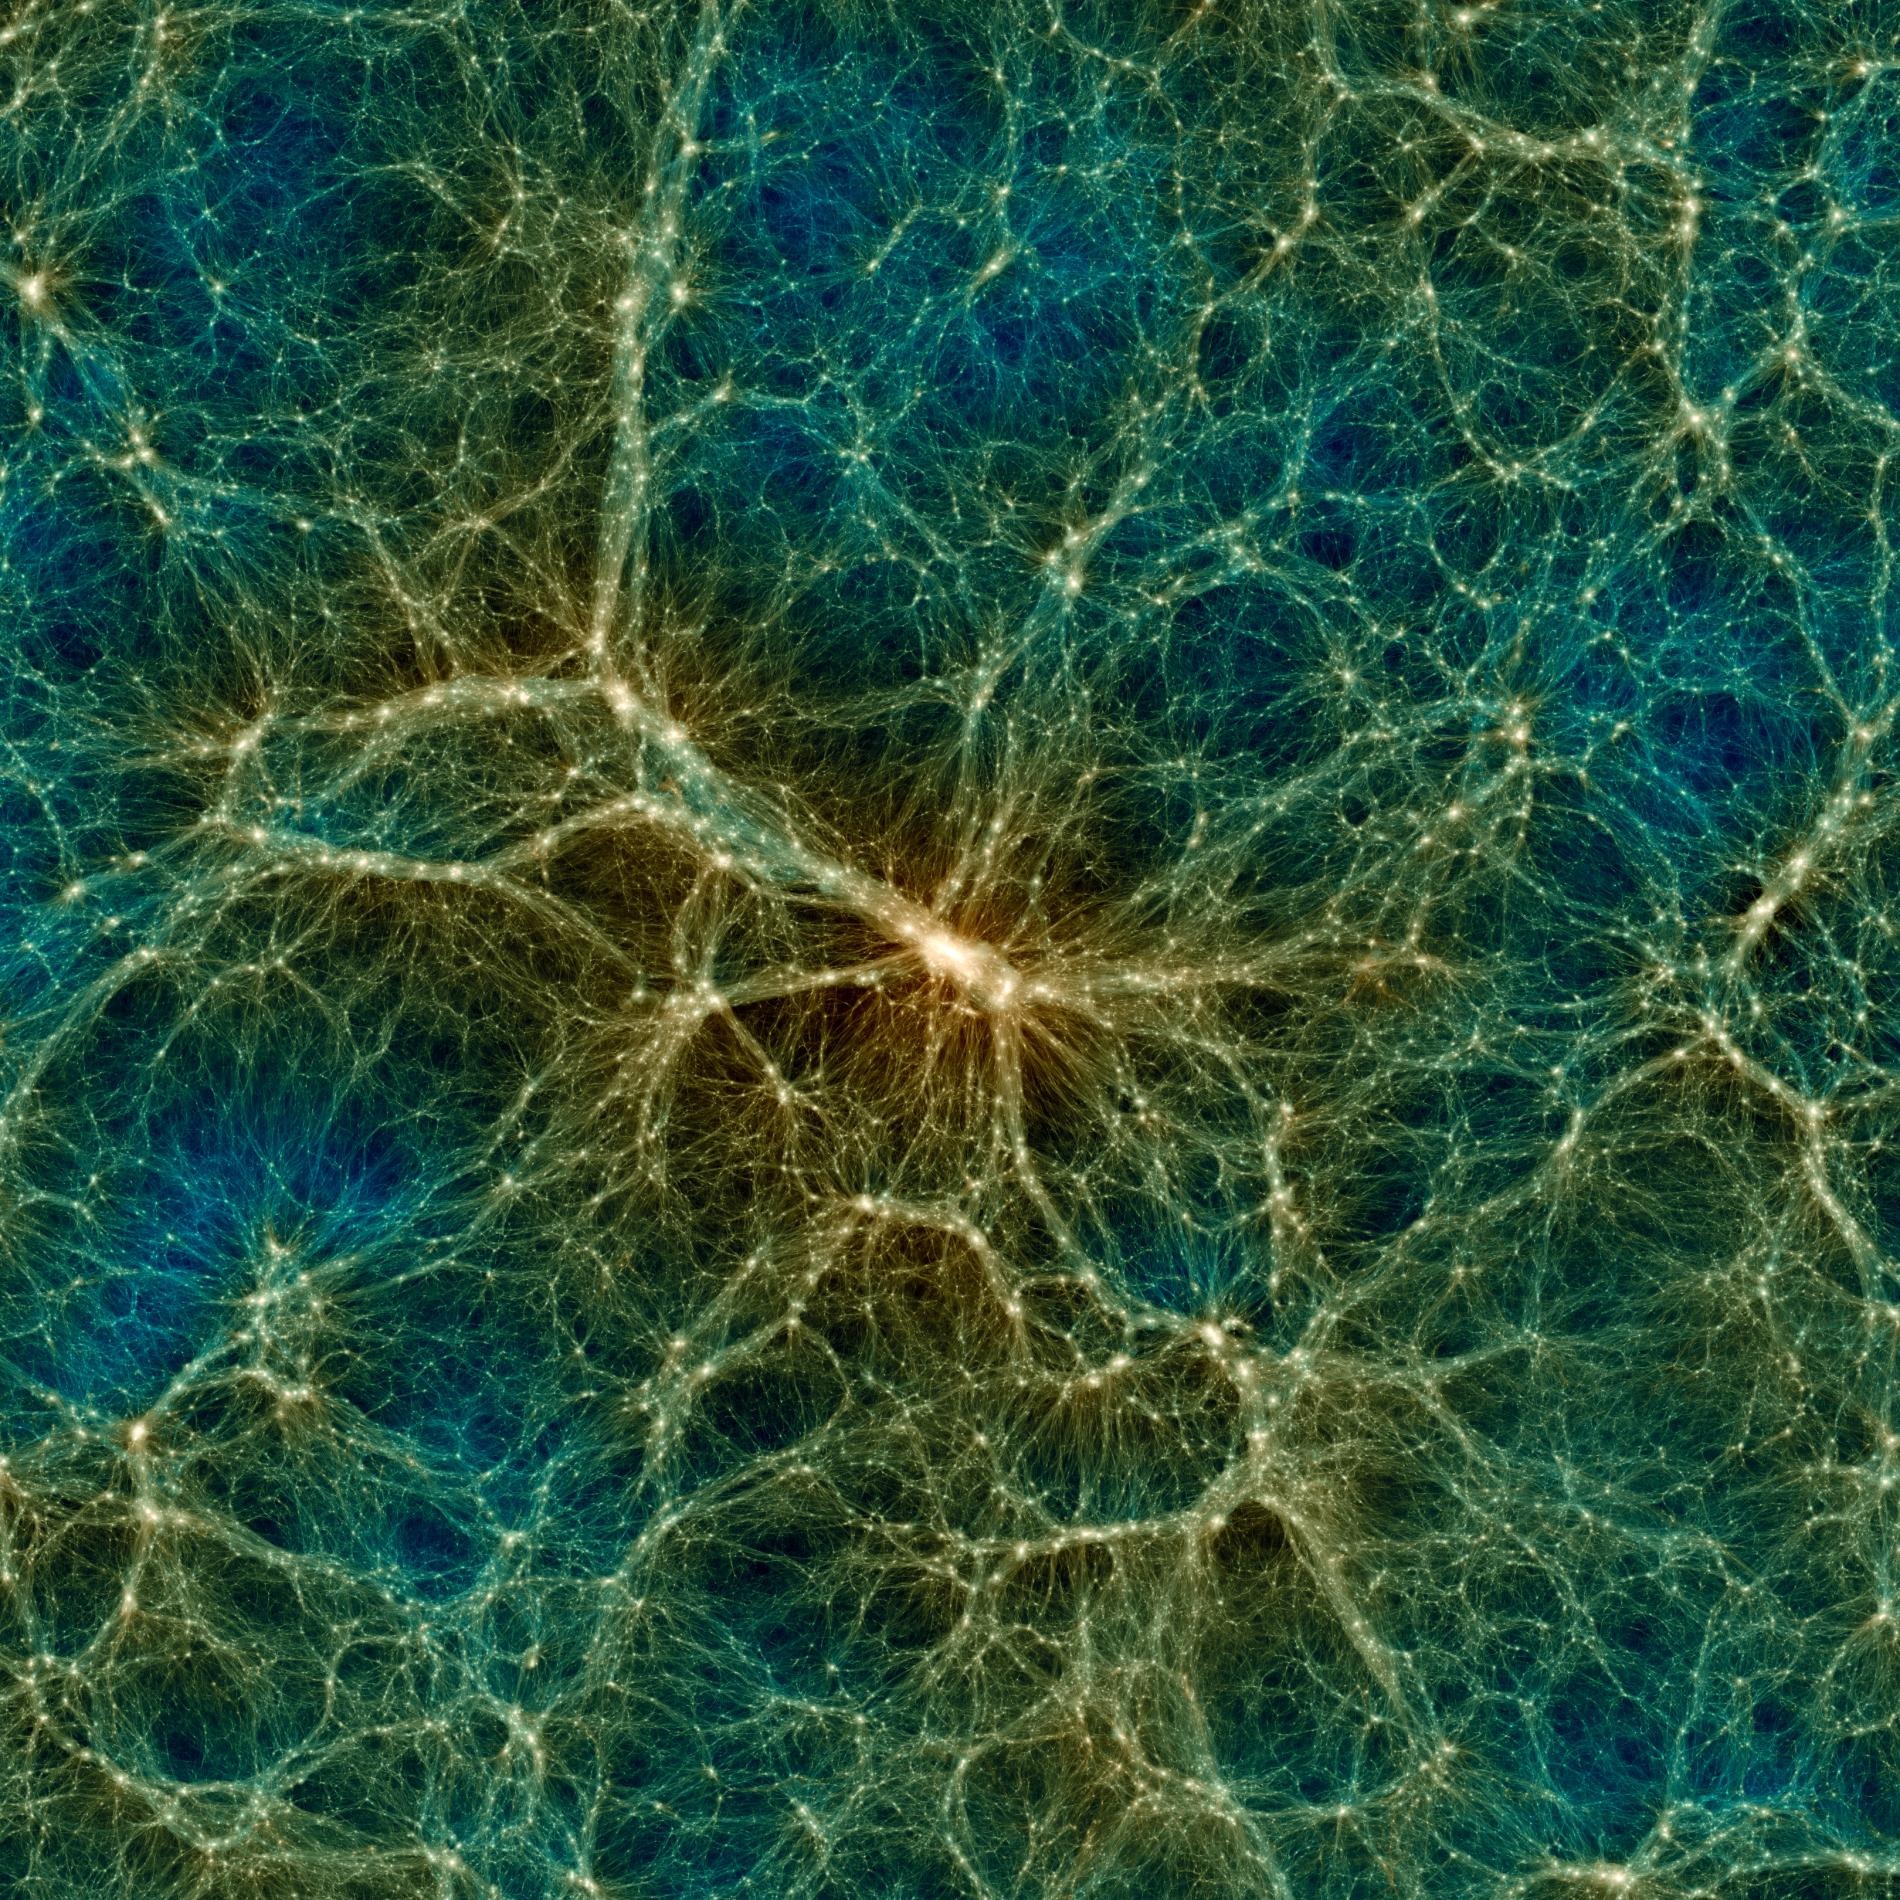 Кластерна структура Всесвіту із галактичними нитками та войдами